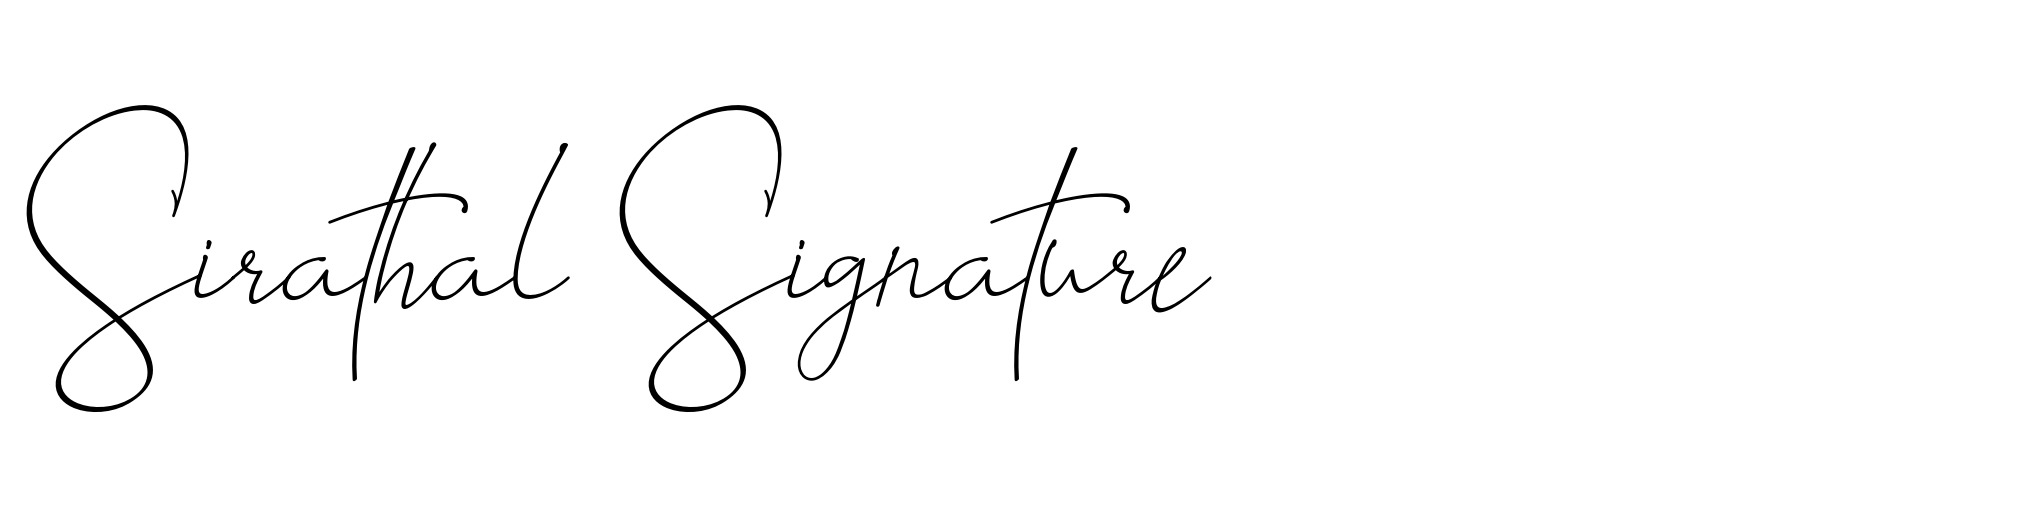 Sirathal Signature image